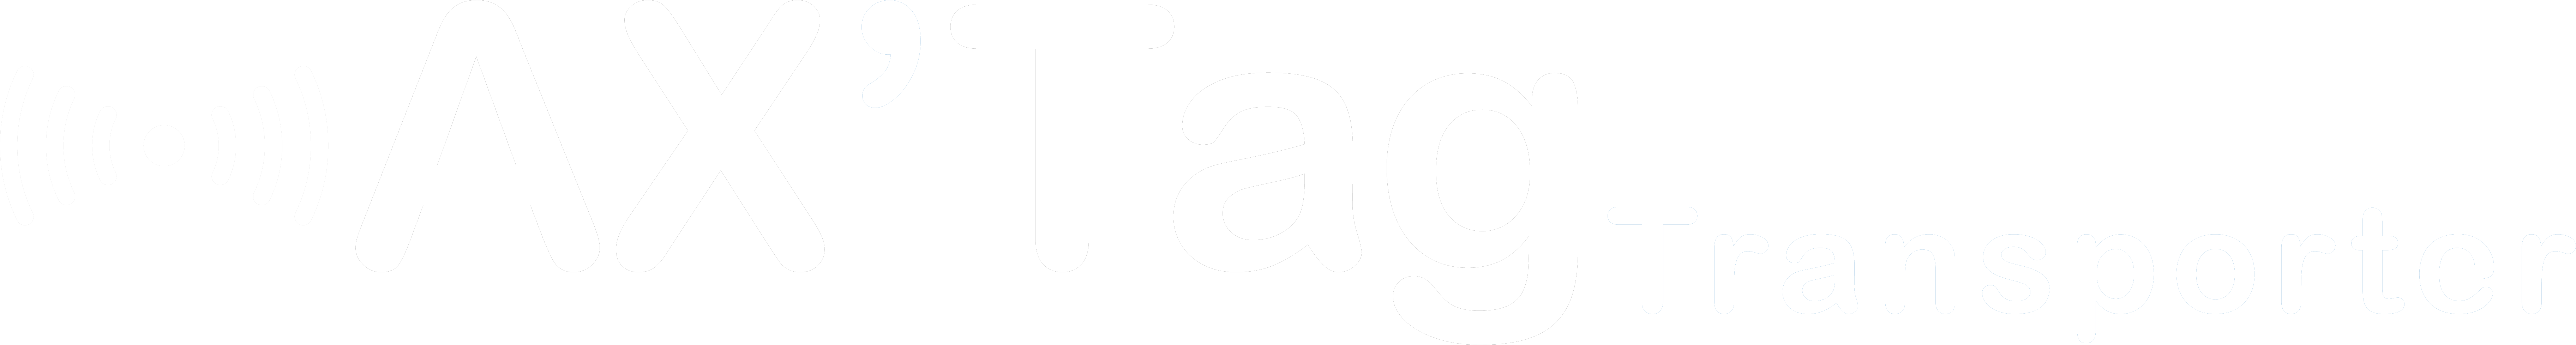 Axtag logo Transporter Png